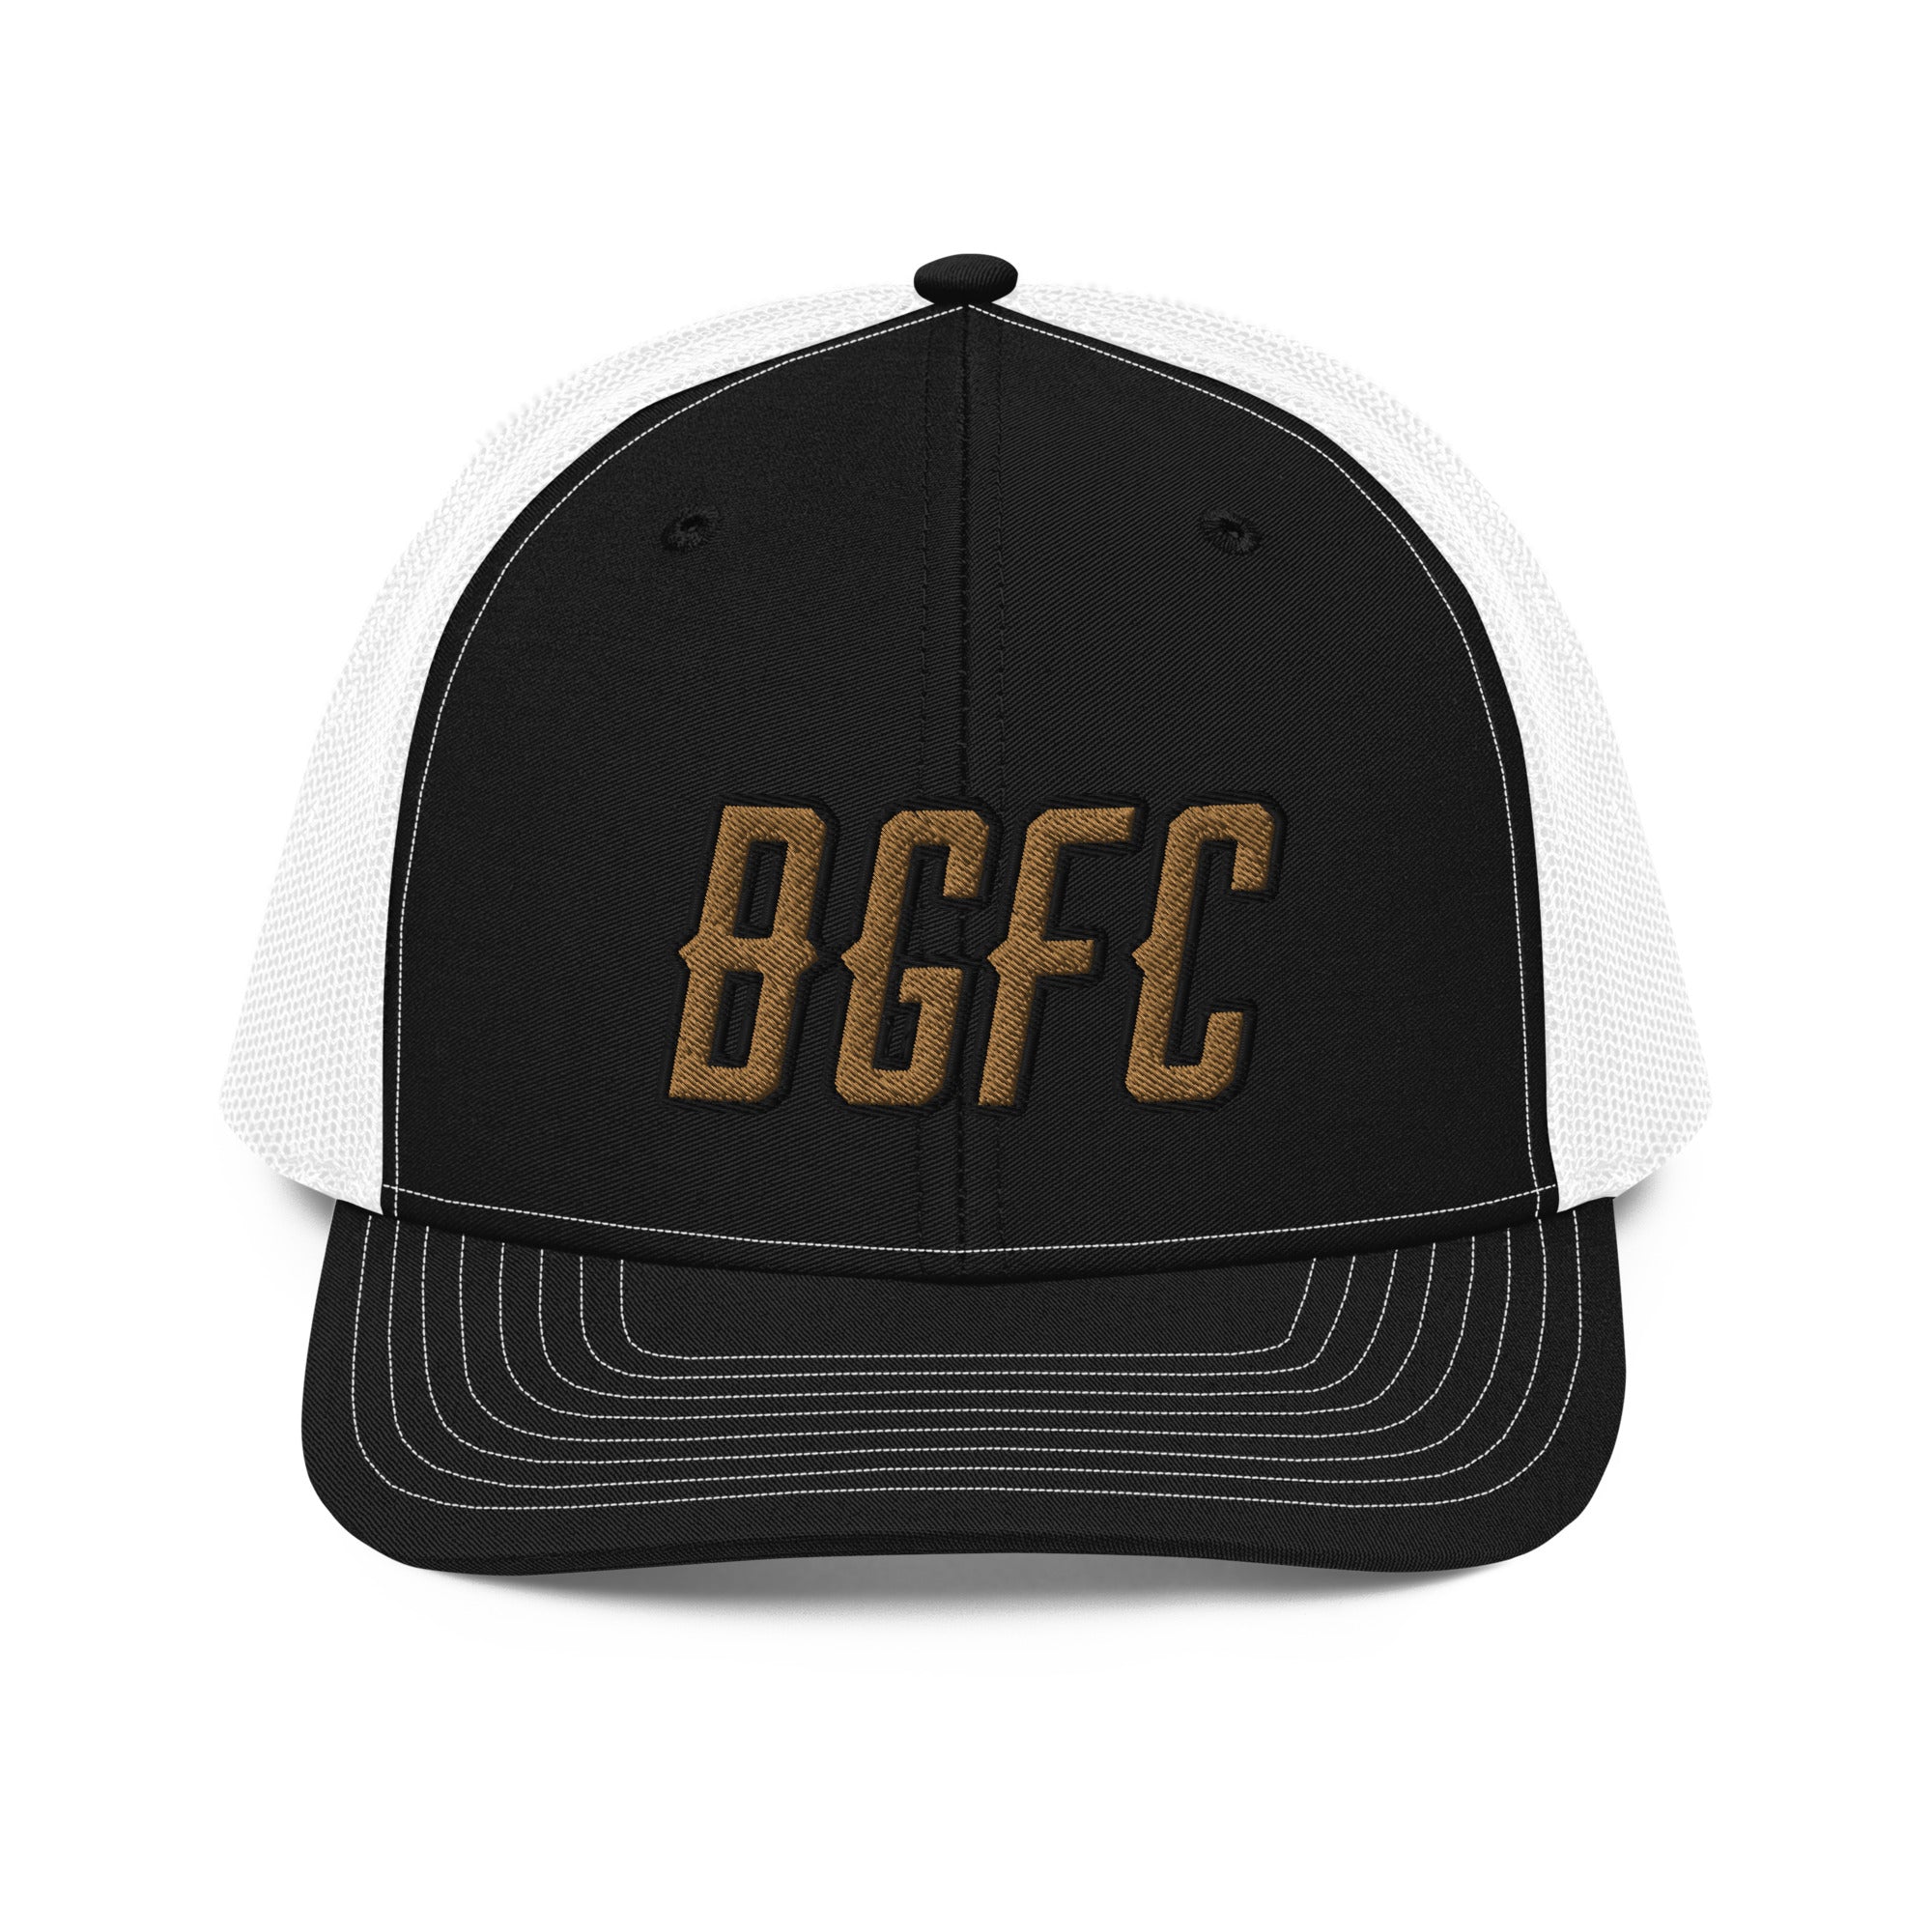 BGFC Futuristic Mesh Cap